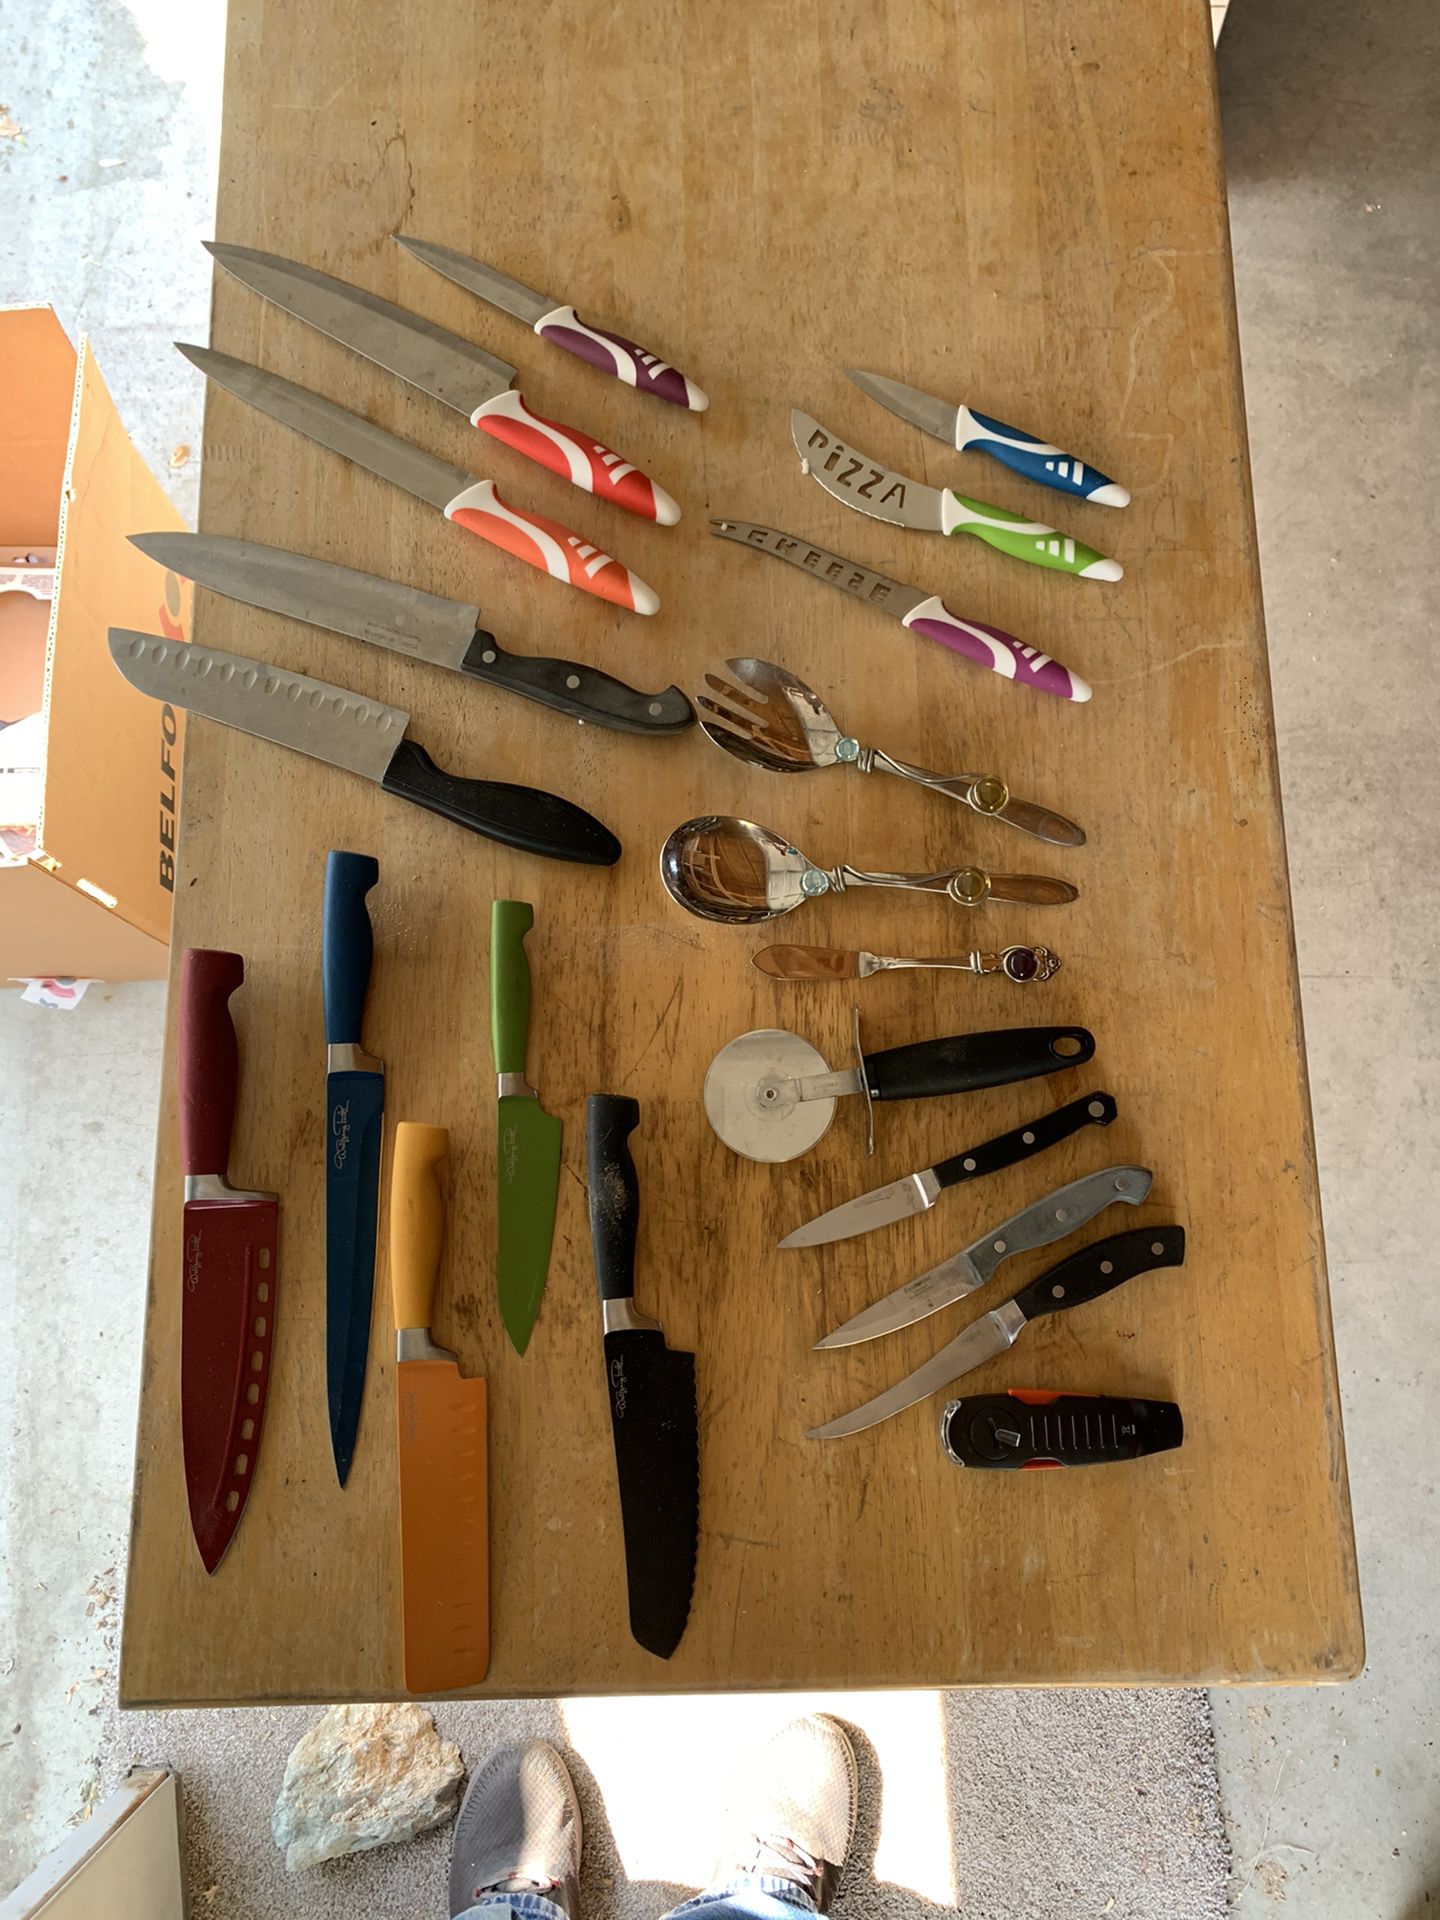 Kitchen knives pizza cutter sharpener